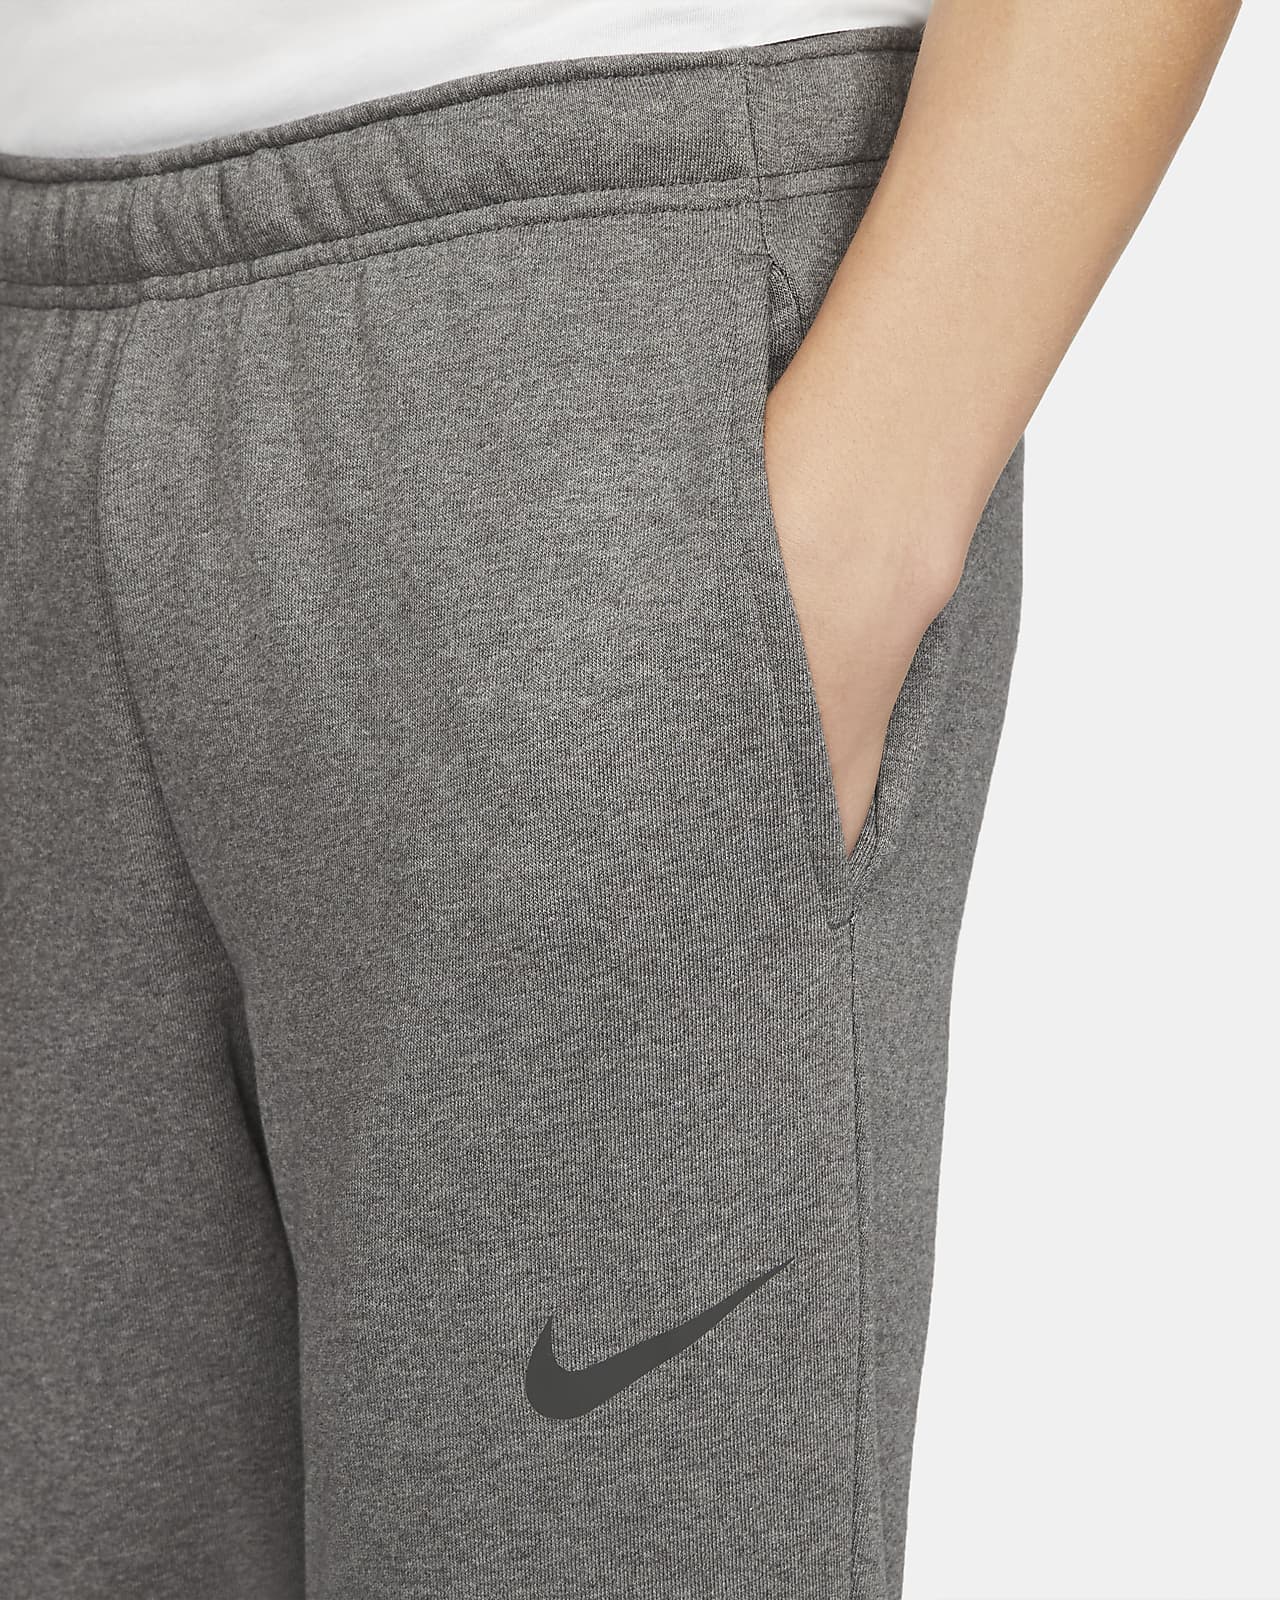 Nike | Dri-FIT Men's Fleece Training Pants | Closed Hem Fleece Jogging  Bottoms | SportsDirect.com